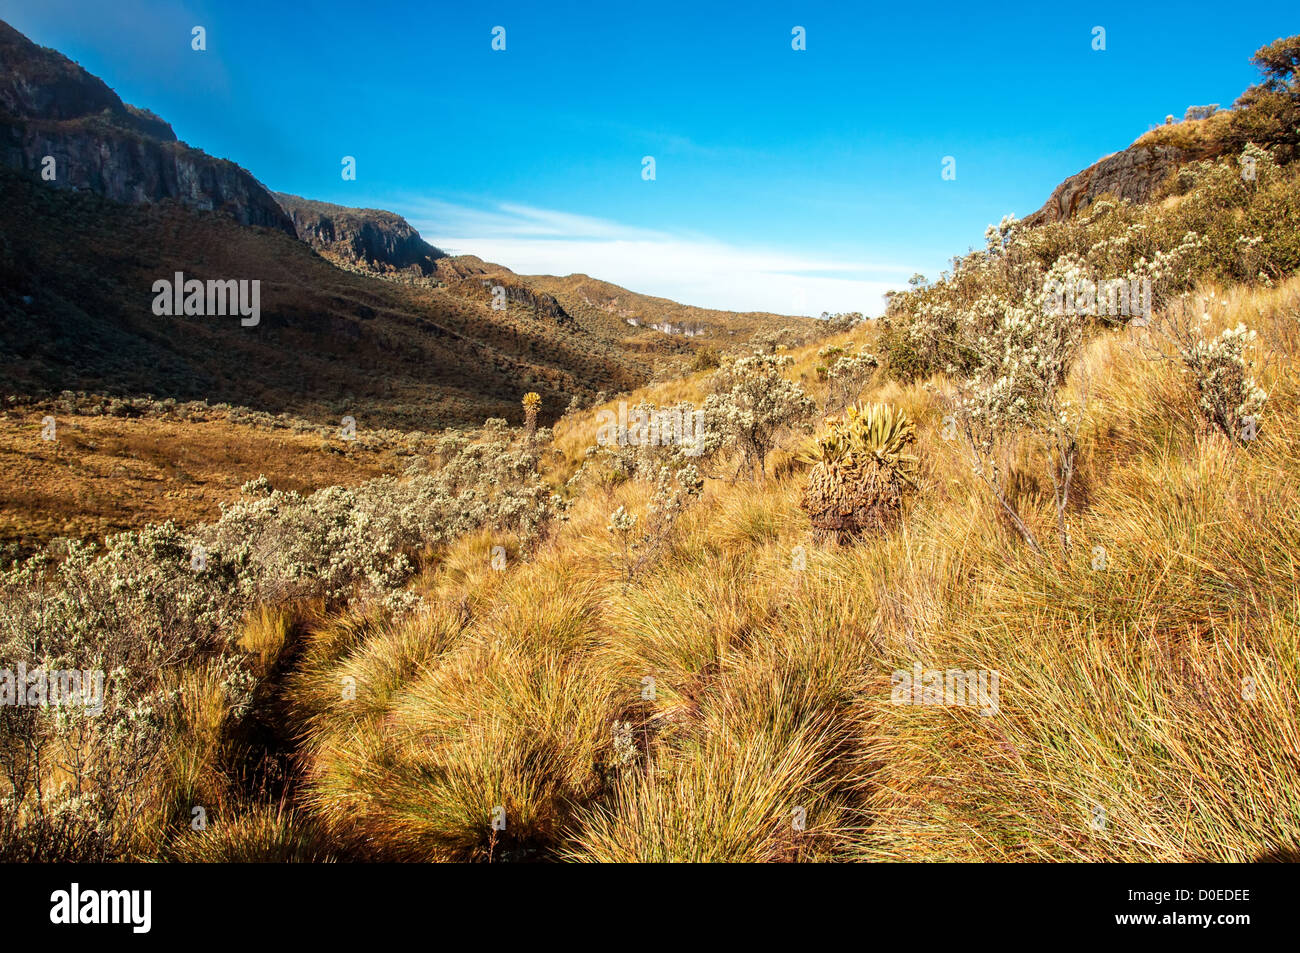 The landscape of the Nevado del Ruiz National Park in Colombia. Stock Photo